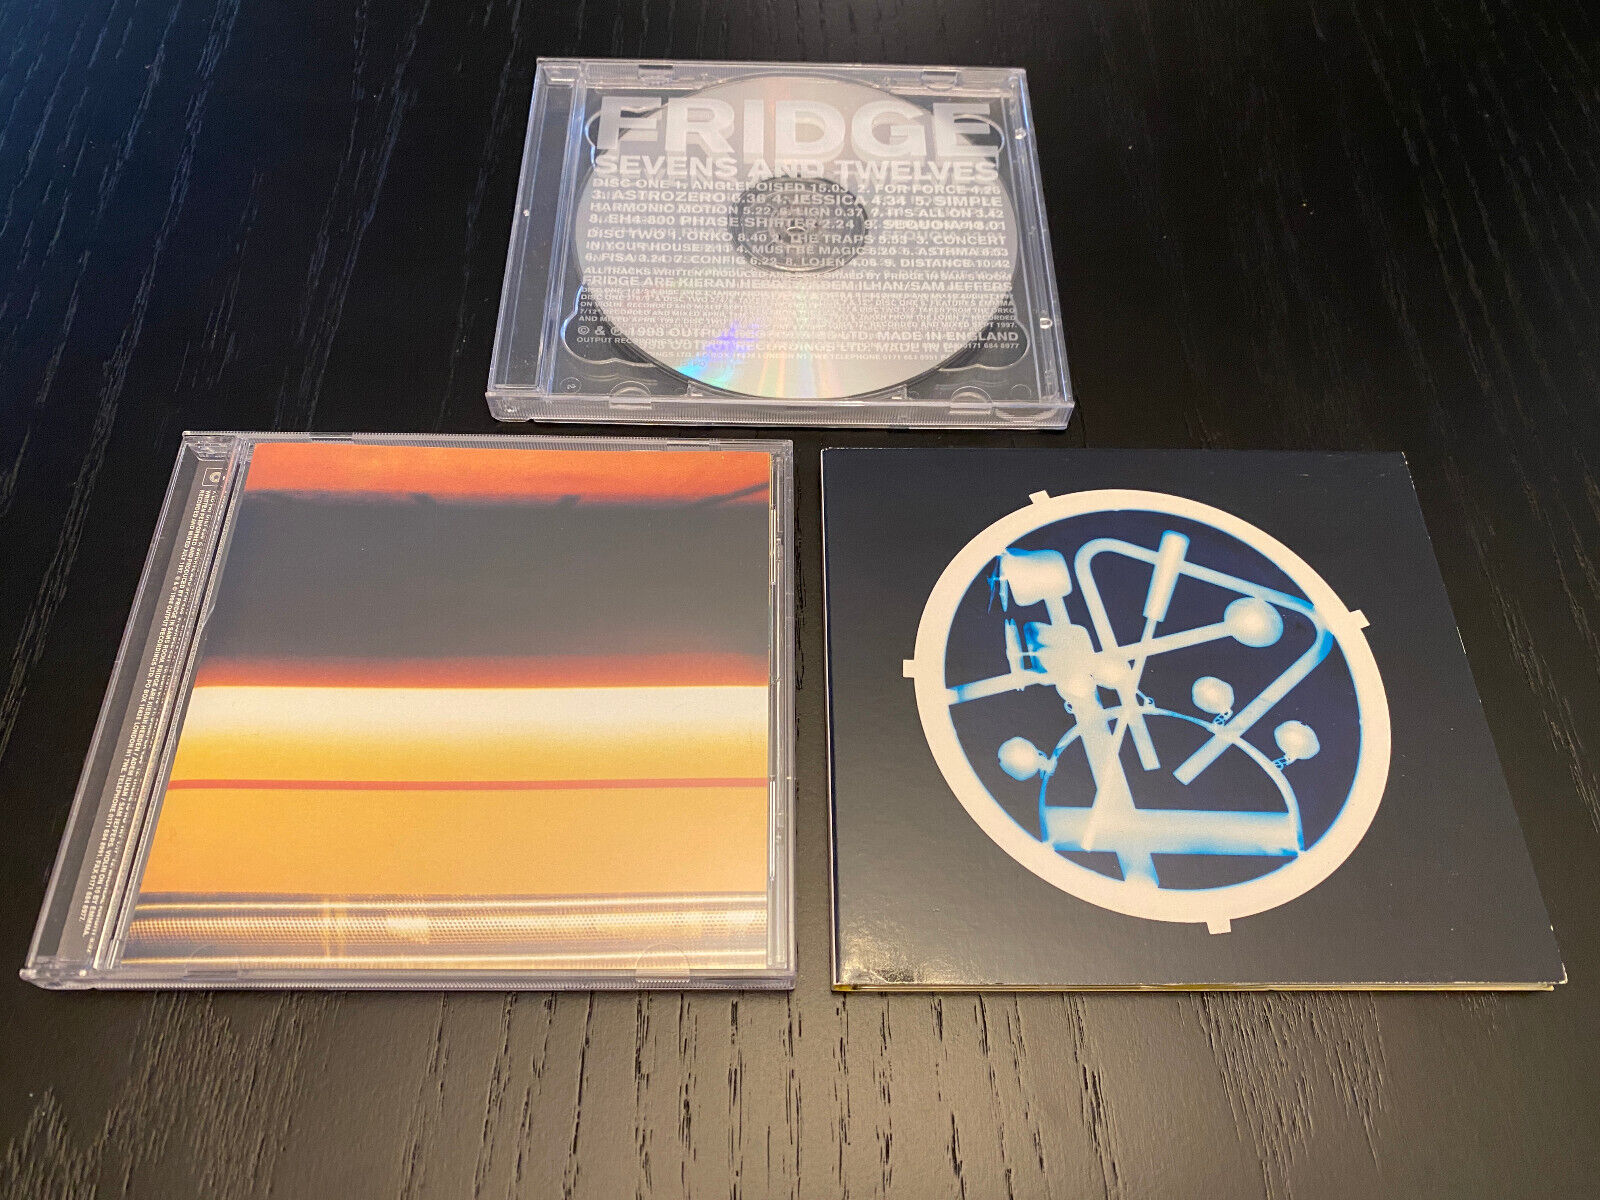 Fridge - Set of 3 Albums on CD - Sevens & Twelves (2xDiscs), Semaphore & The Sun